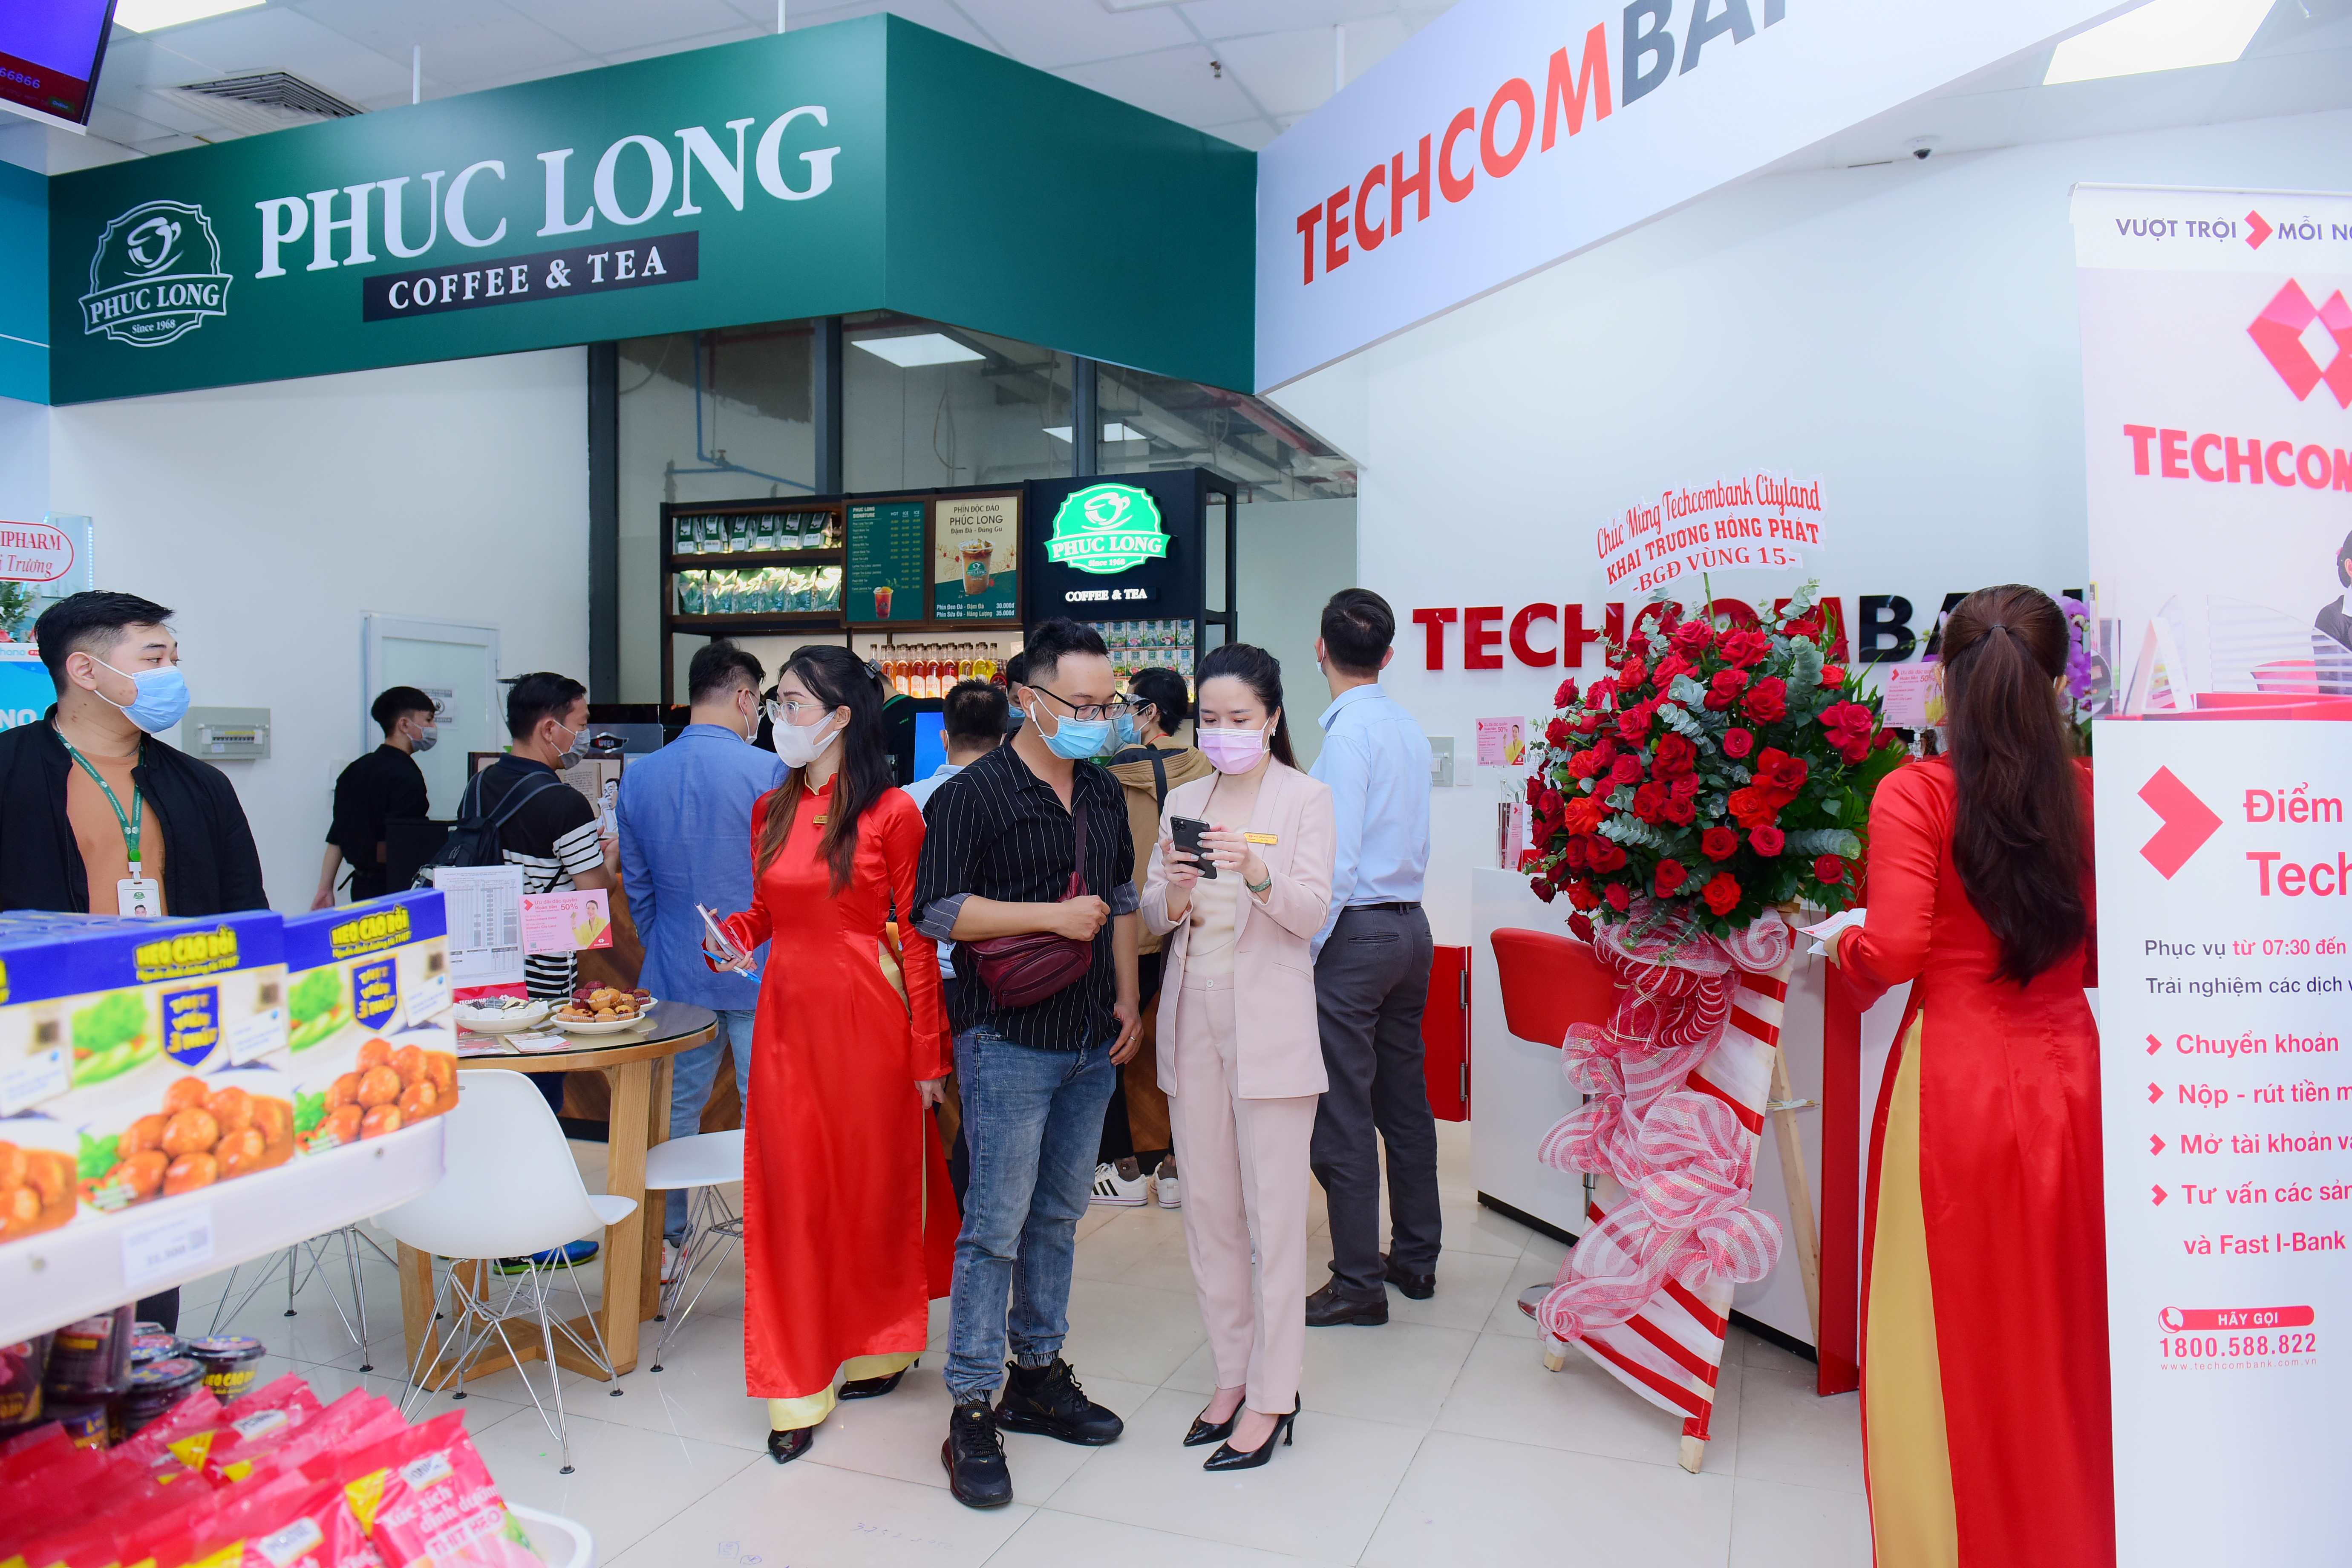 A Phuc Long coffee - tea kiosk is set up next to a Techcombank transaction counter inside a WinMart+ store.